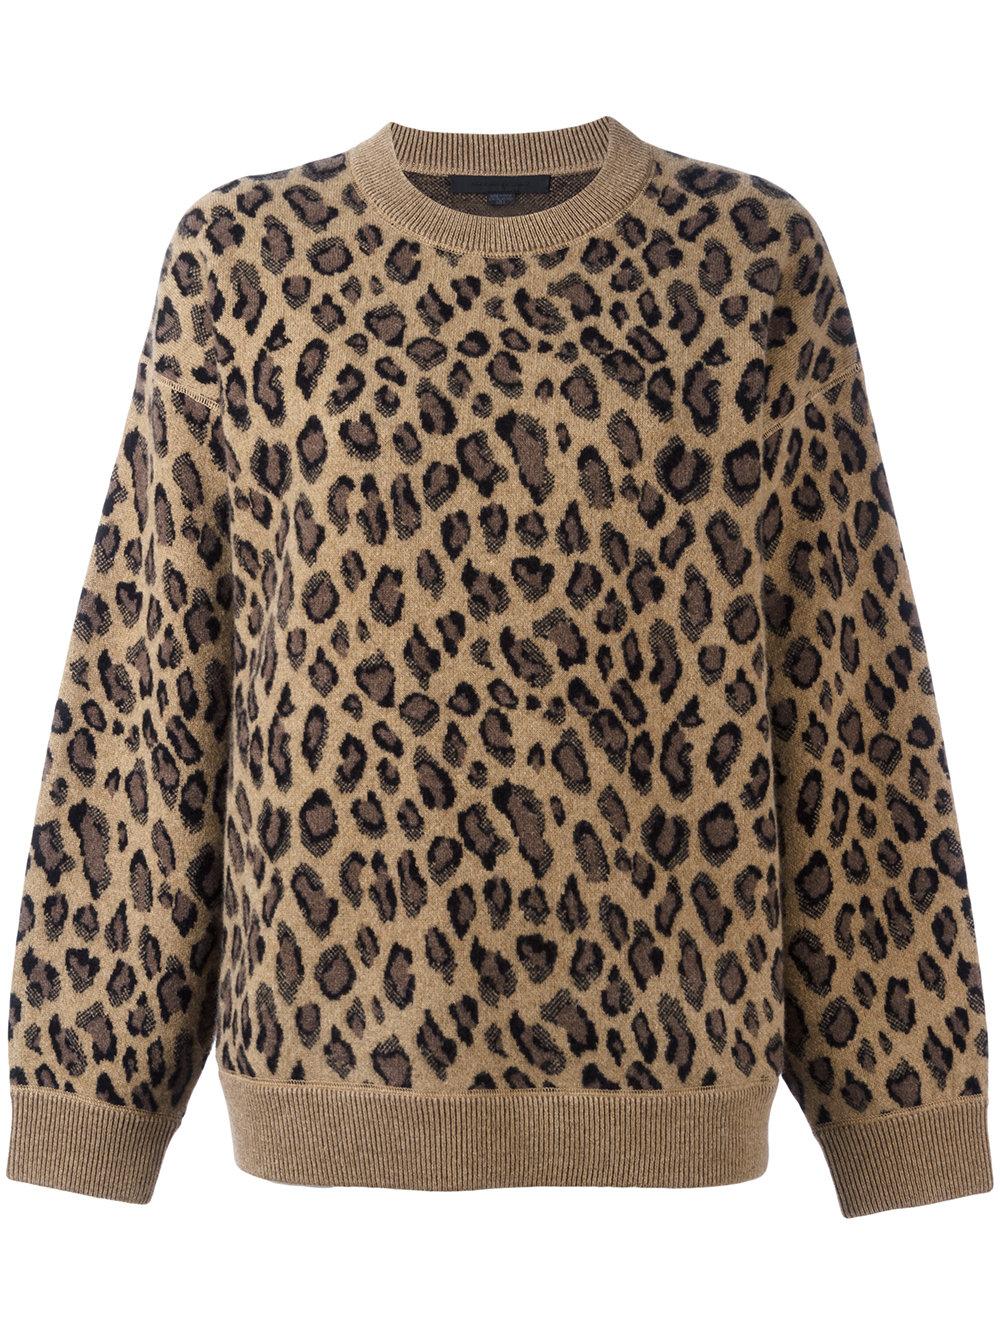 Alexander Wang Wool Leopard Print Sweater in Brown - Lyst